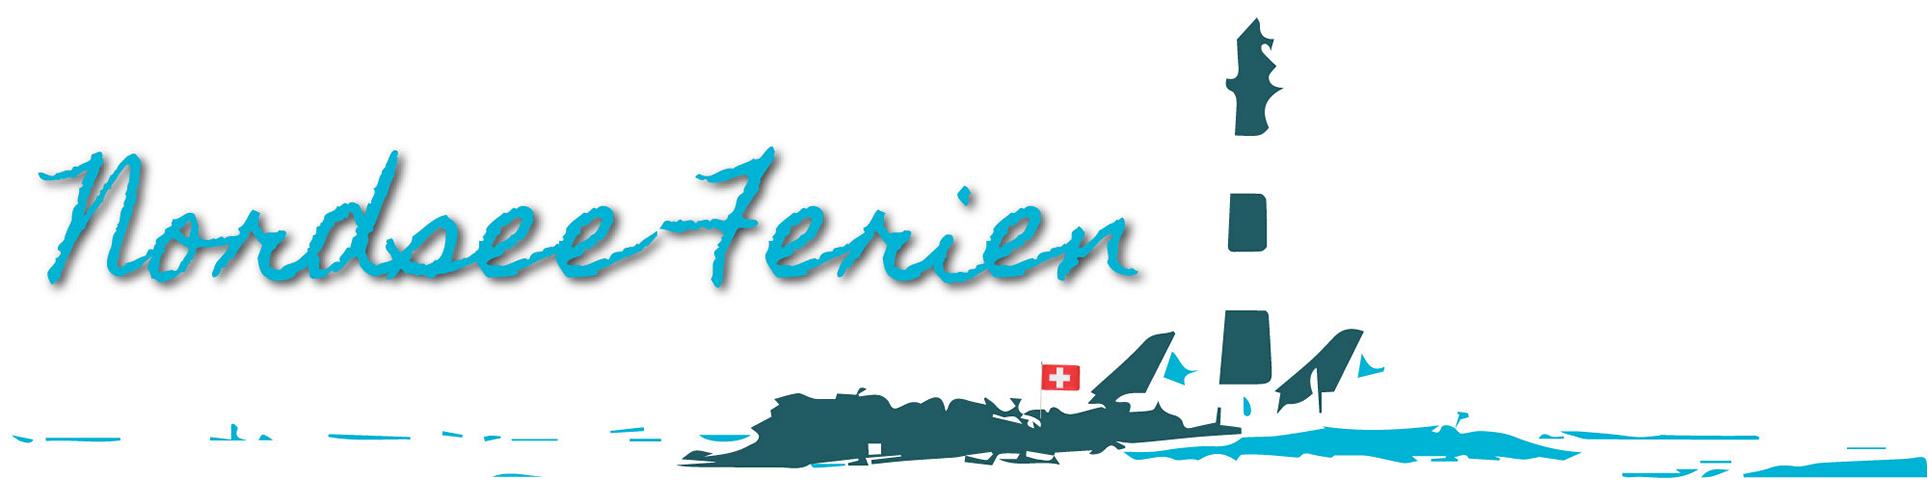 Verzell doch das em Fährimaa Podcast Ferry-tales Nordsee Ostsee Reisen Ferien Schleswig-Holstein Sidney Batt